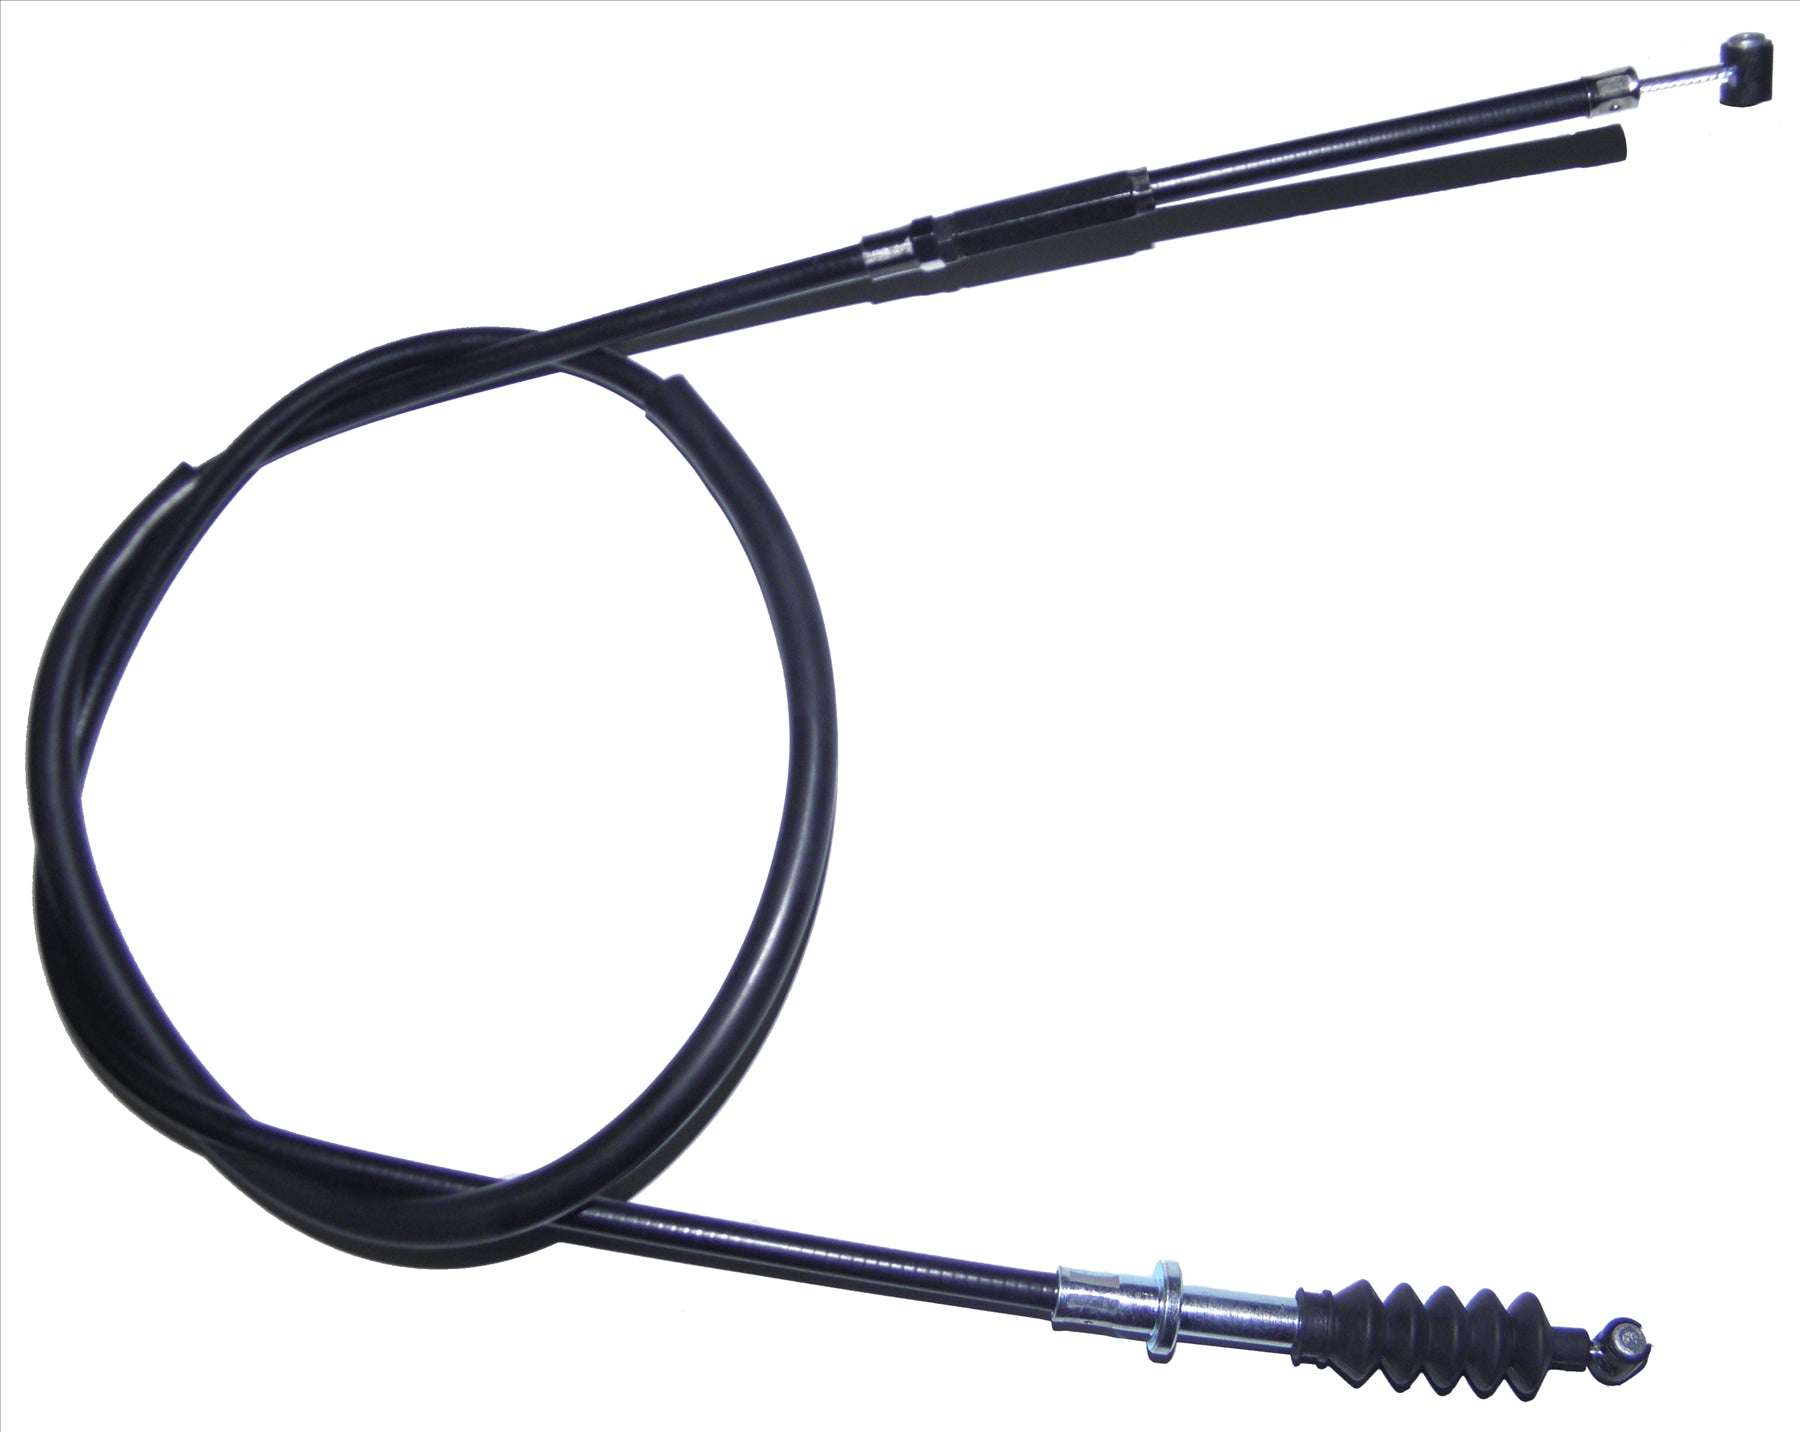 Apico Black Clutch Cable For Kawasaki KX 125 1995-1998